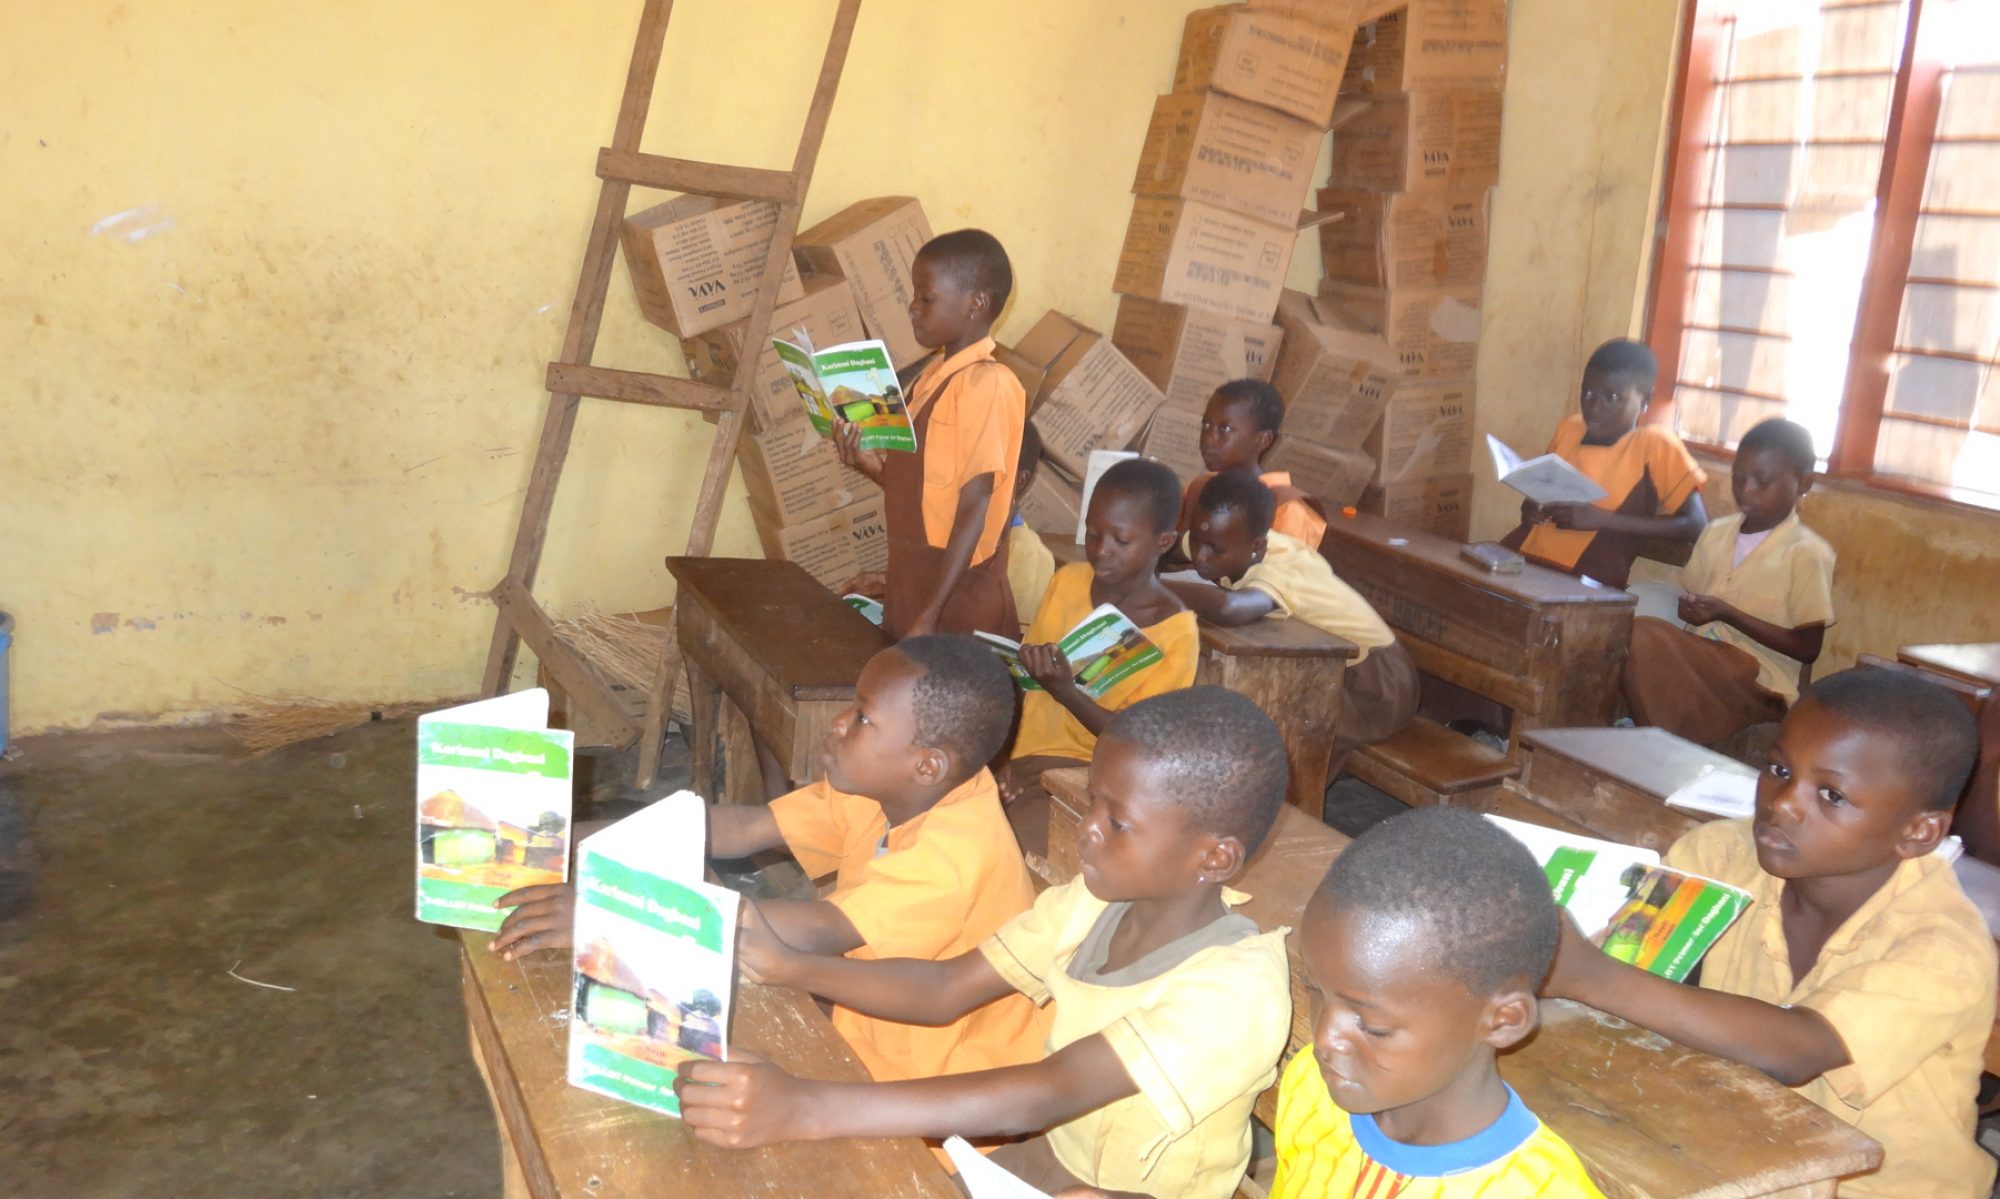 Literacy & Development through Partnership